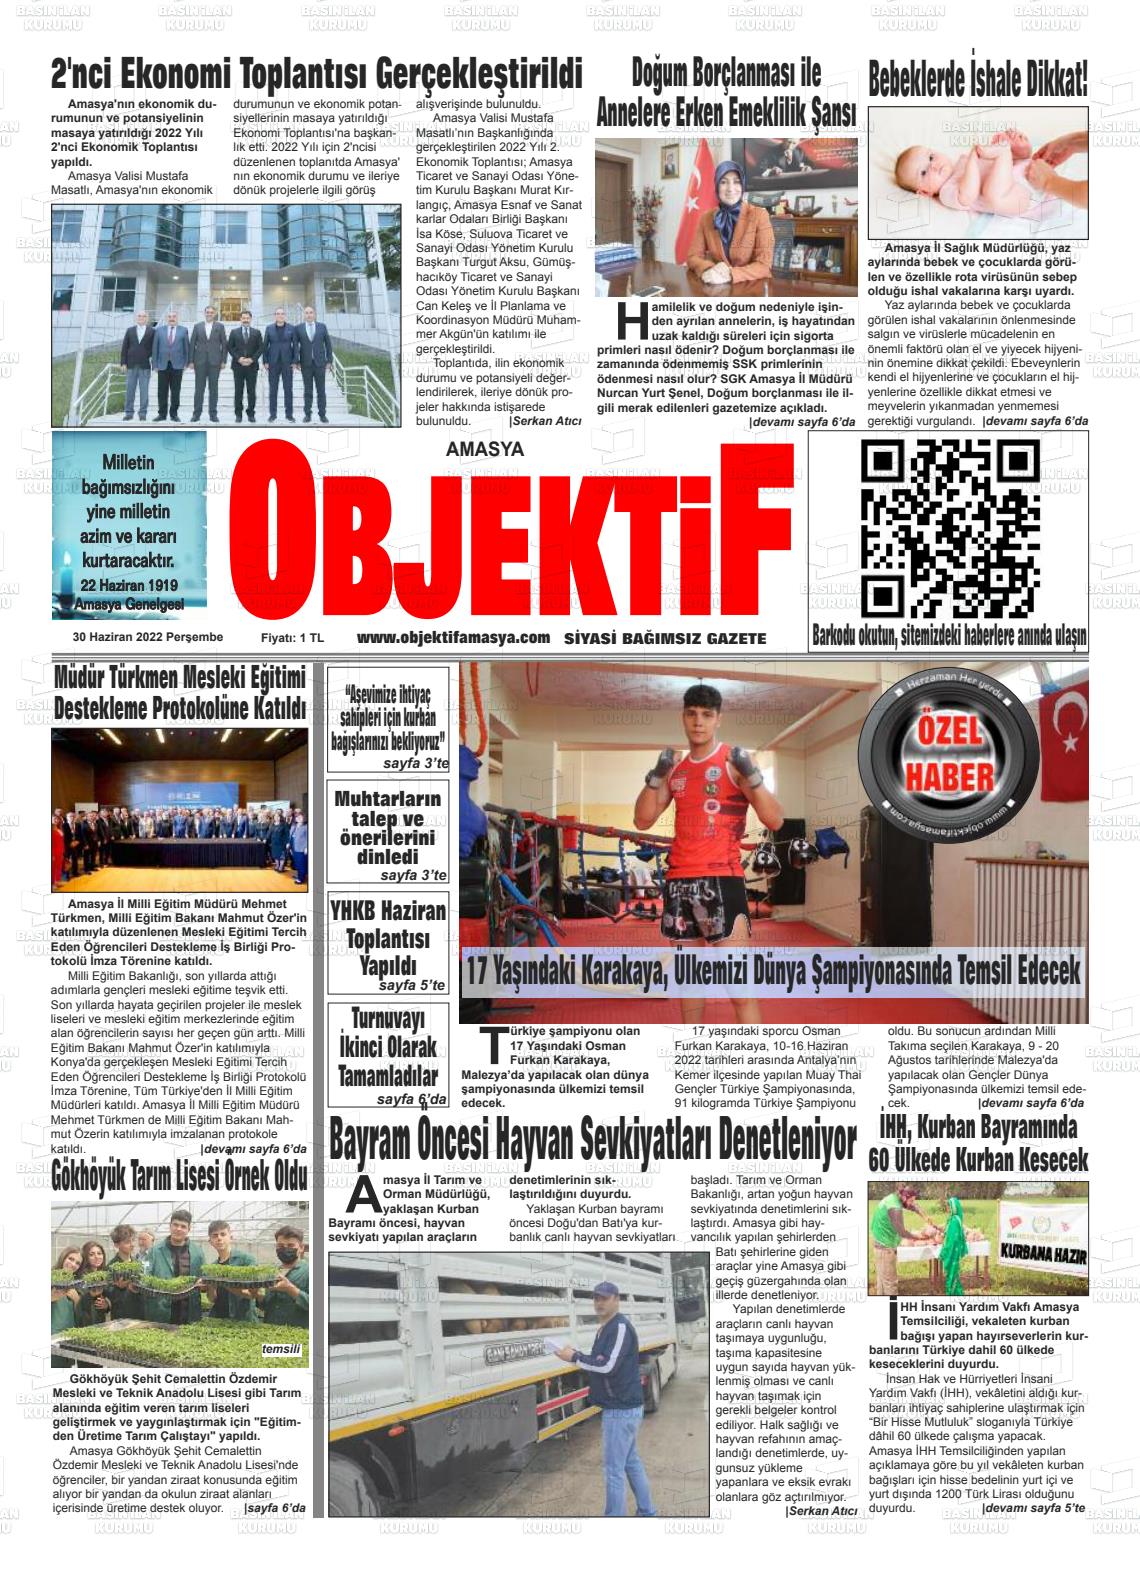 02 Temmuz 2022 Amasya Objektif Gazete Manşeti